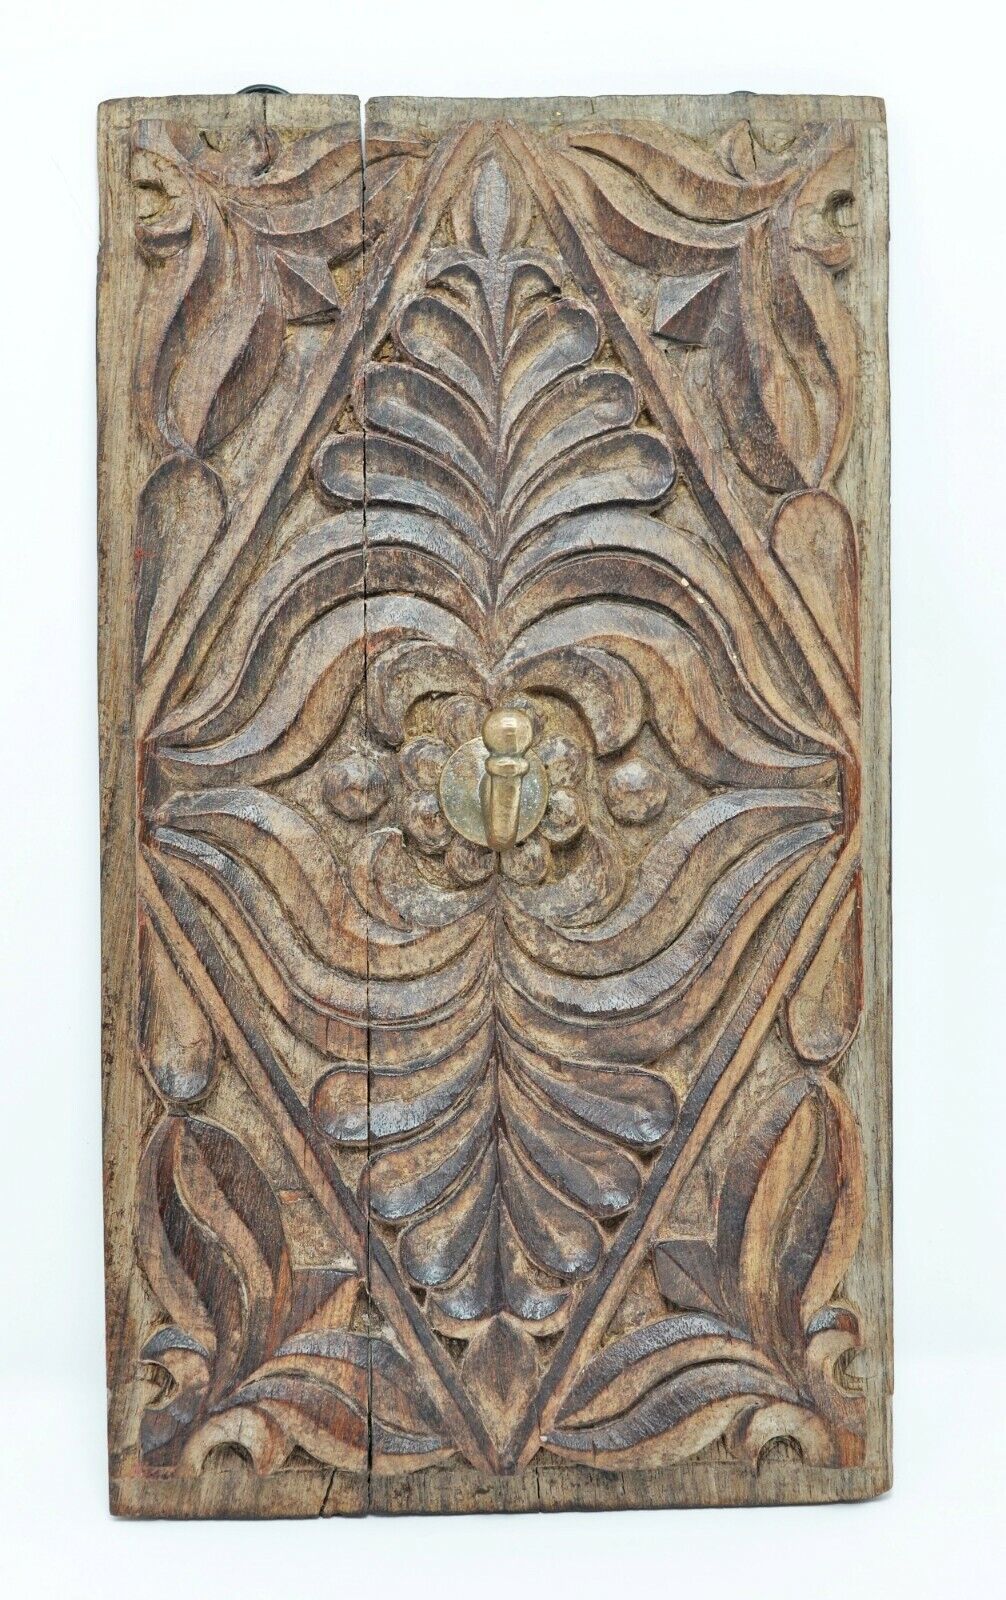 Original Old Antique Fine Hand Carved Wooden Panel With Brass Hook Hanger